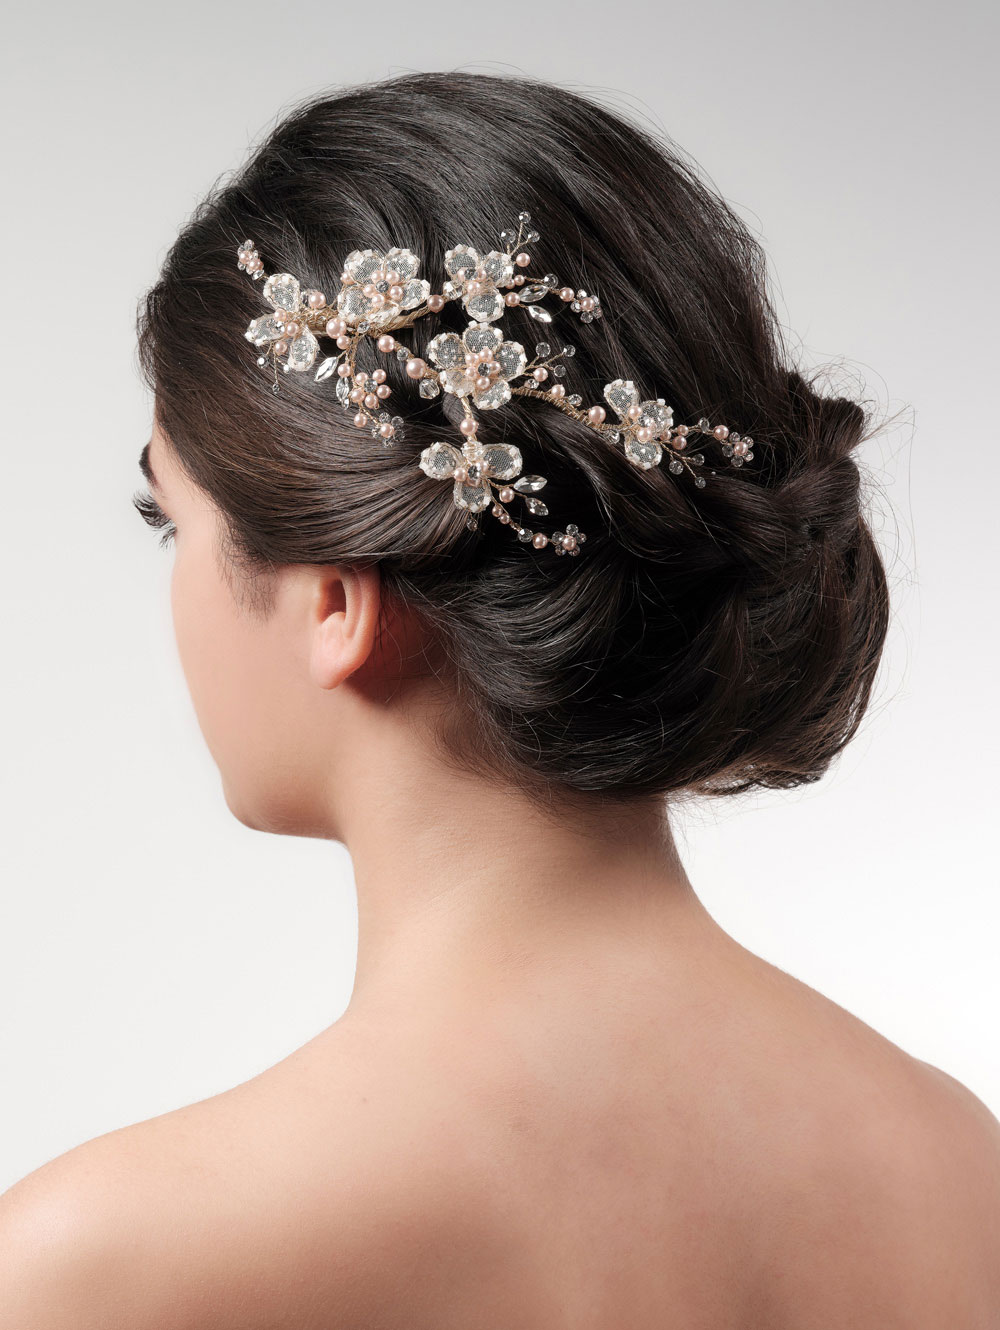 Blossom hair accessory